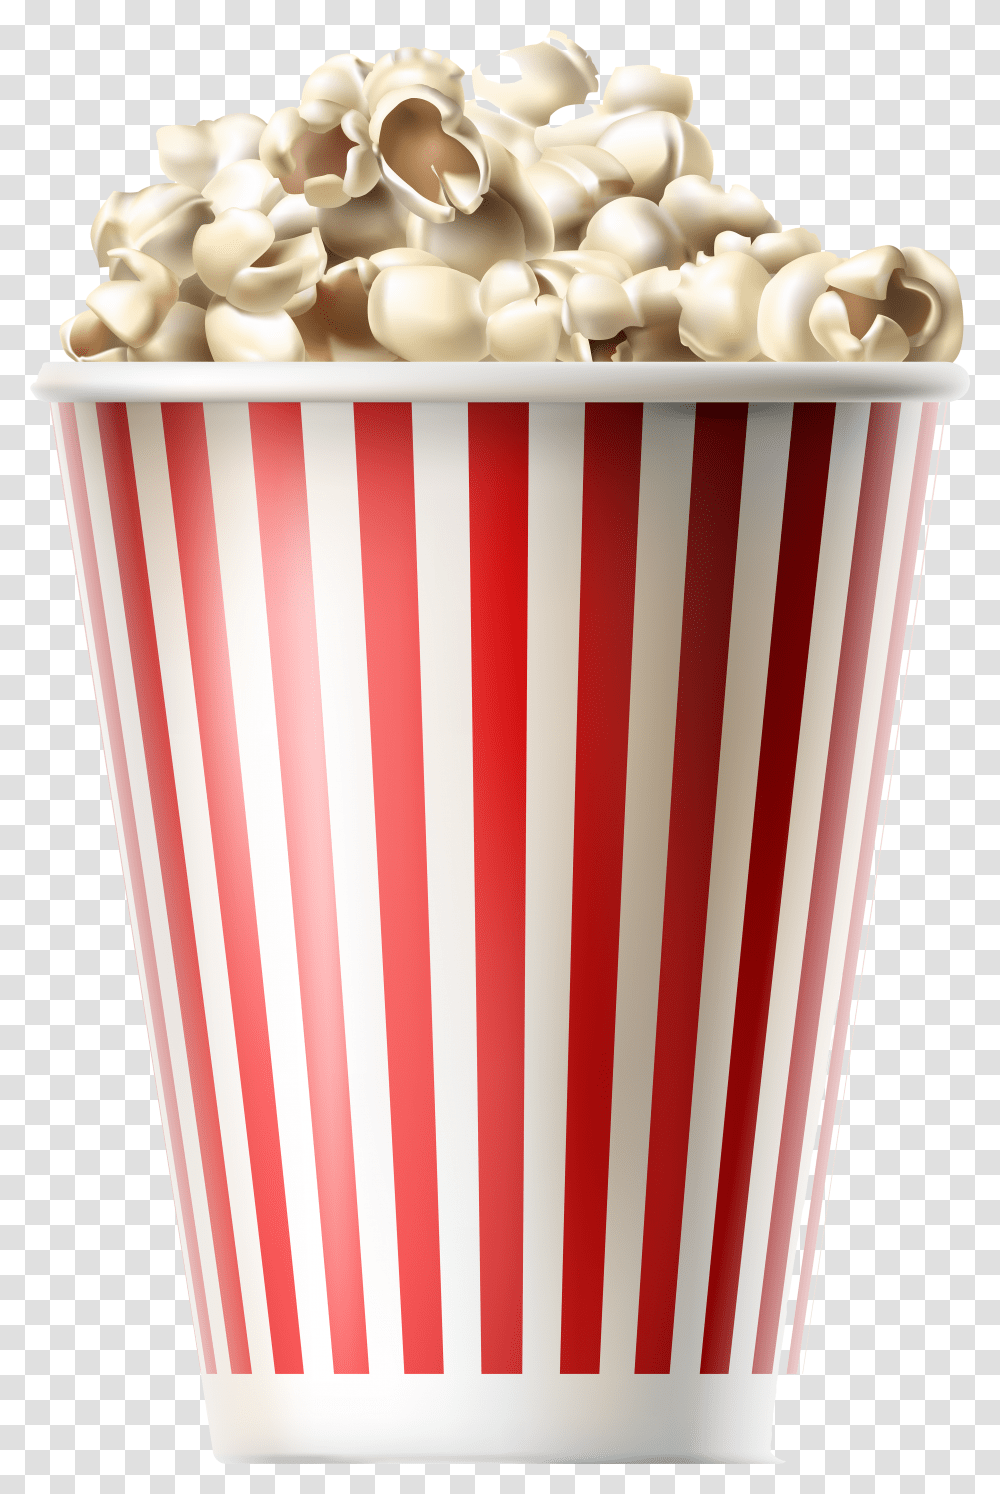 Popcorn Popcorn Clipart Background Transparent Png